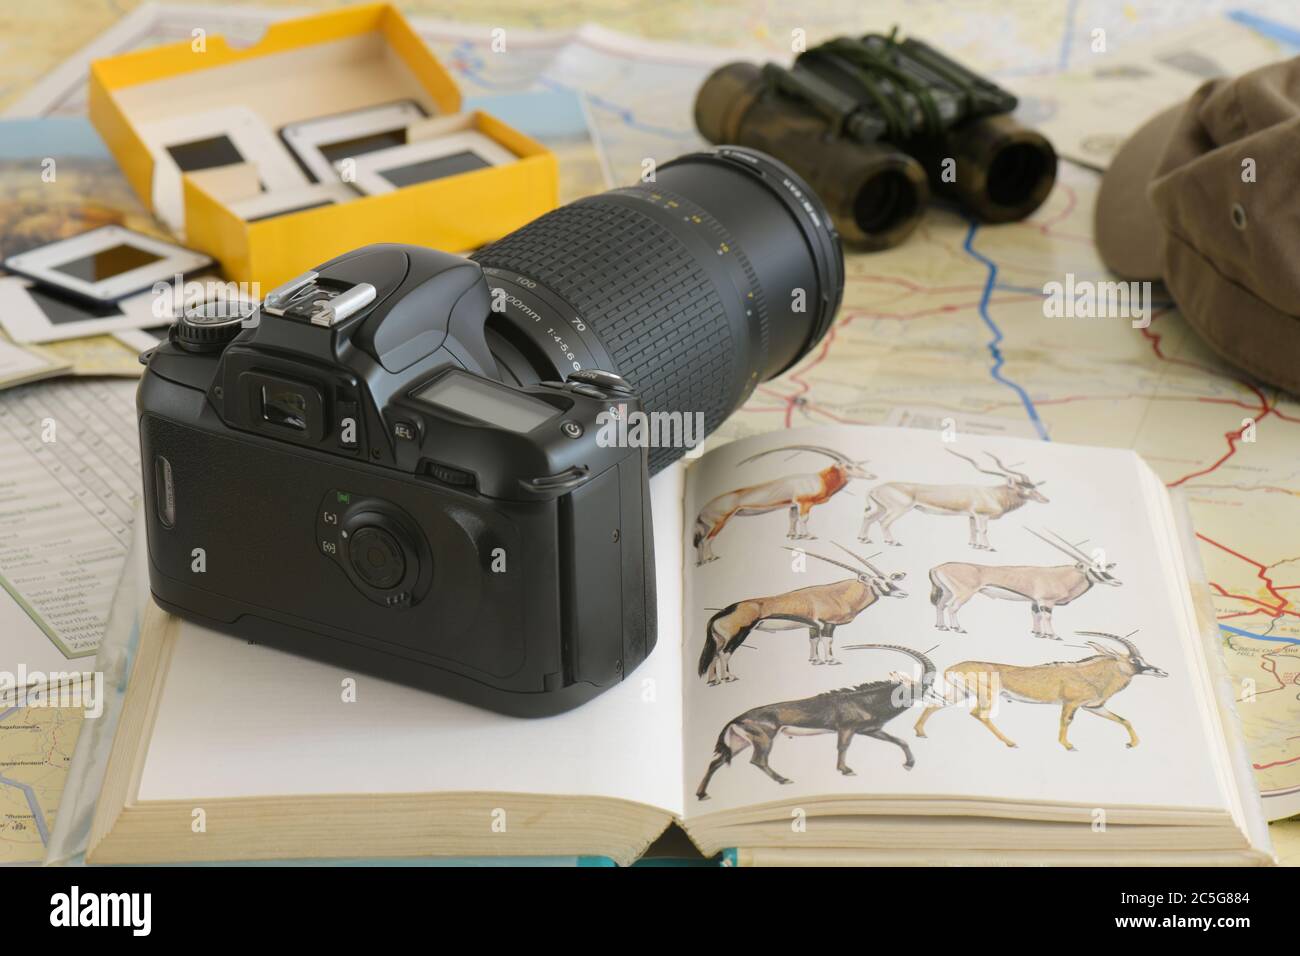 Safari adventure illustration, exploring, objects, binoculars, vintage 35 mm film camera, book, transparency slides, close up, map, animals, concept Stock Photo